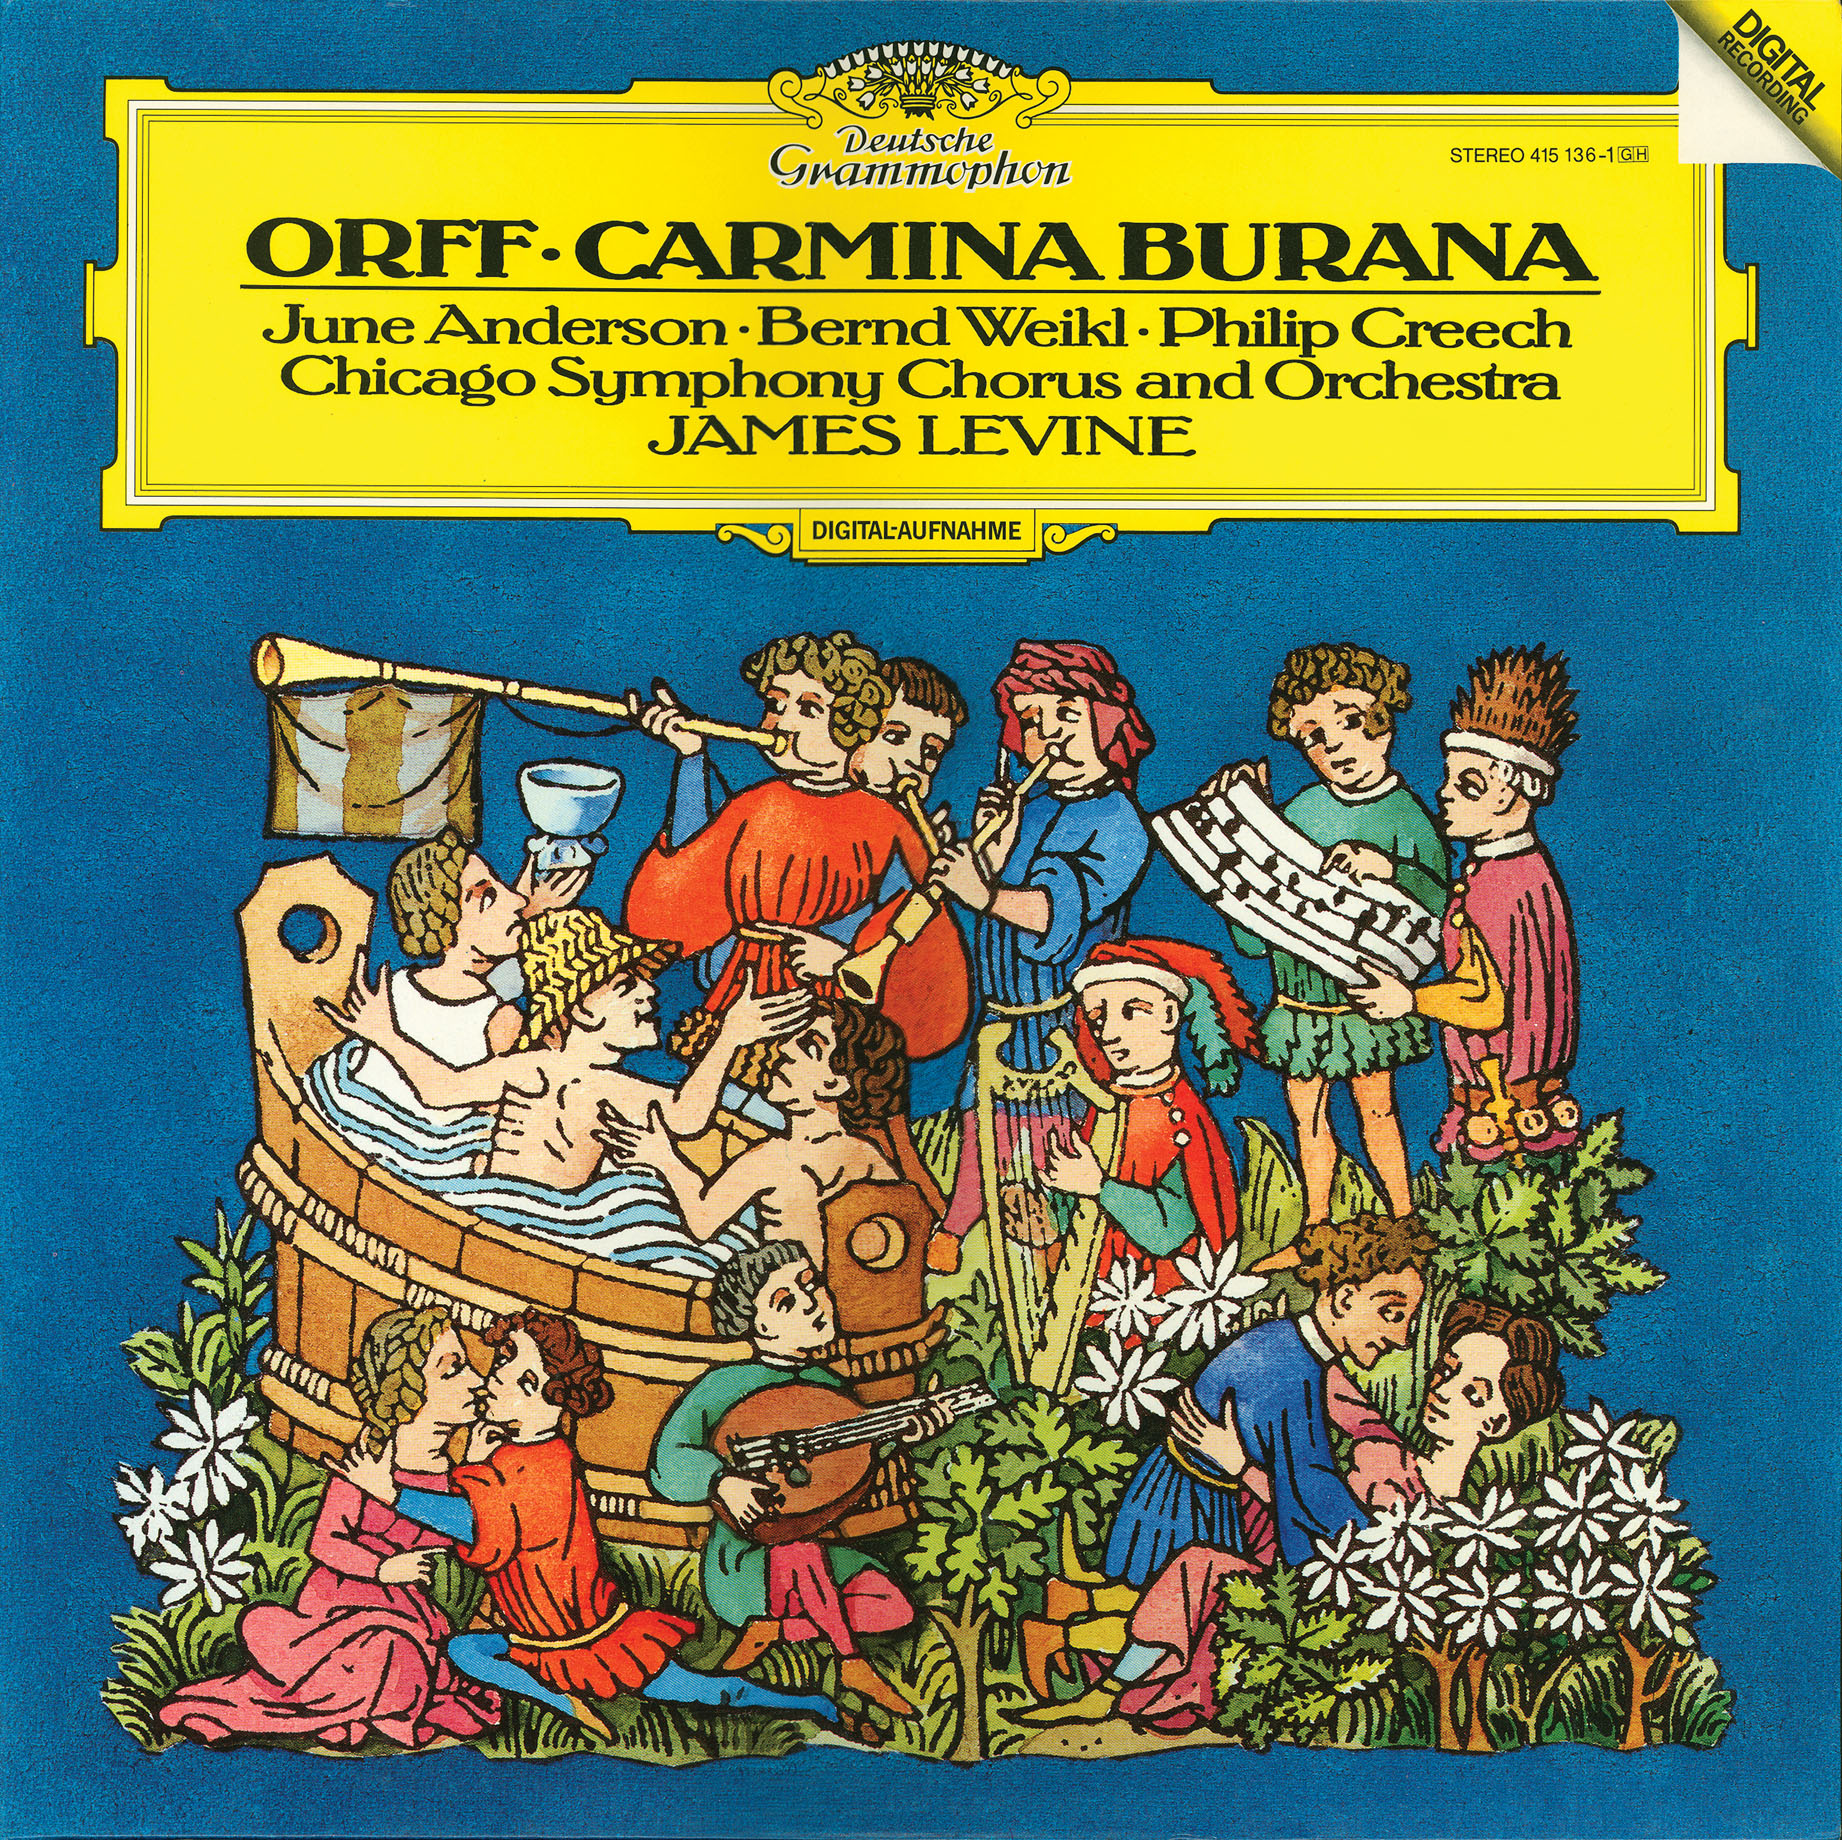 Music for carmina burana